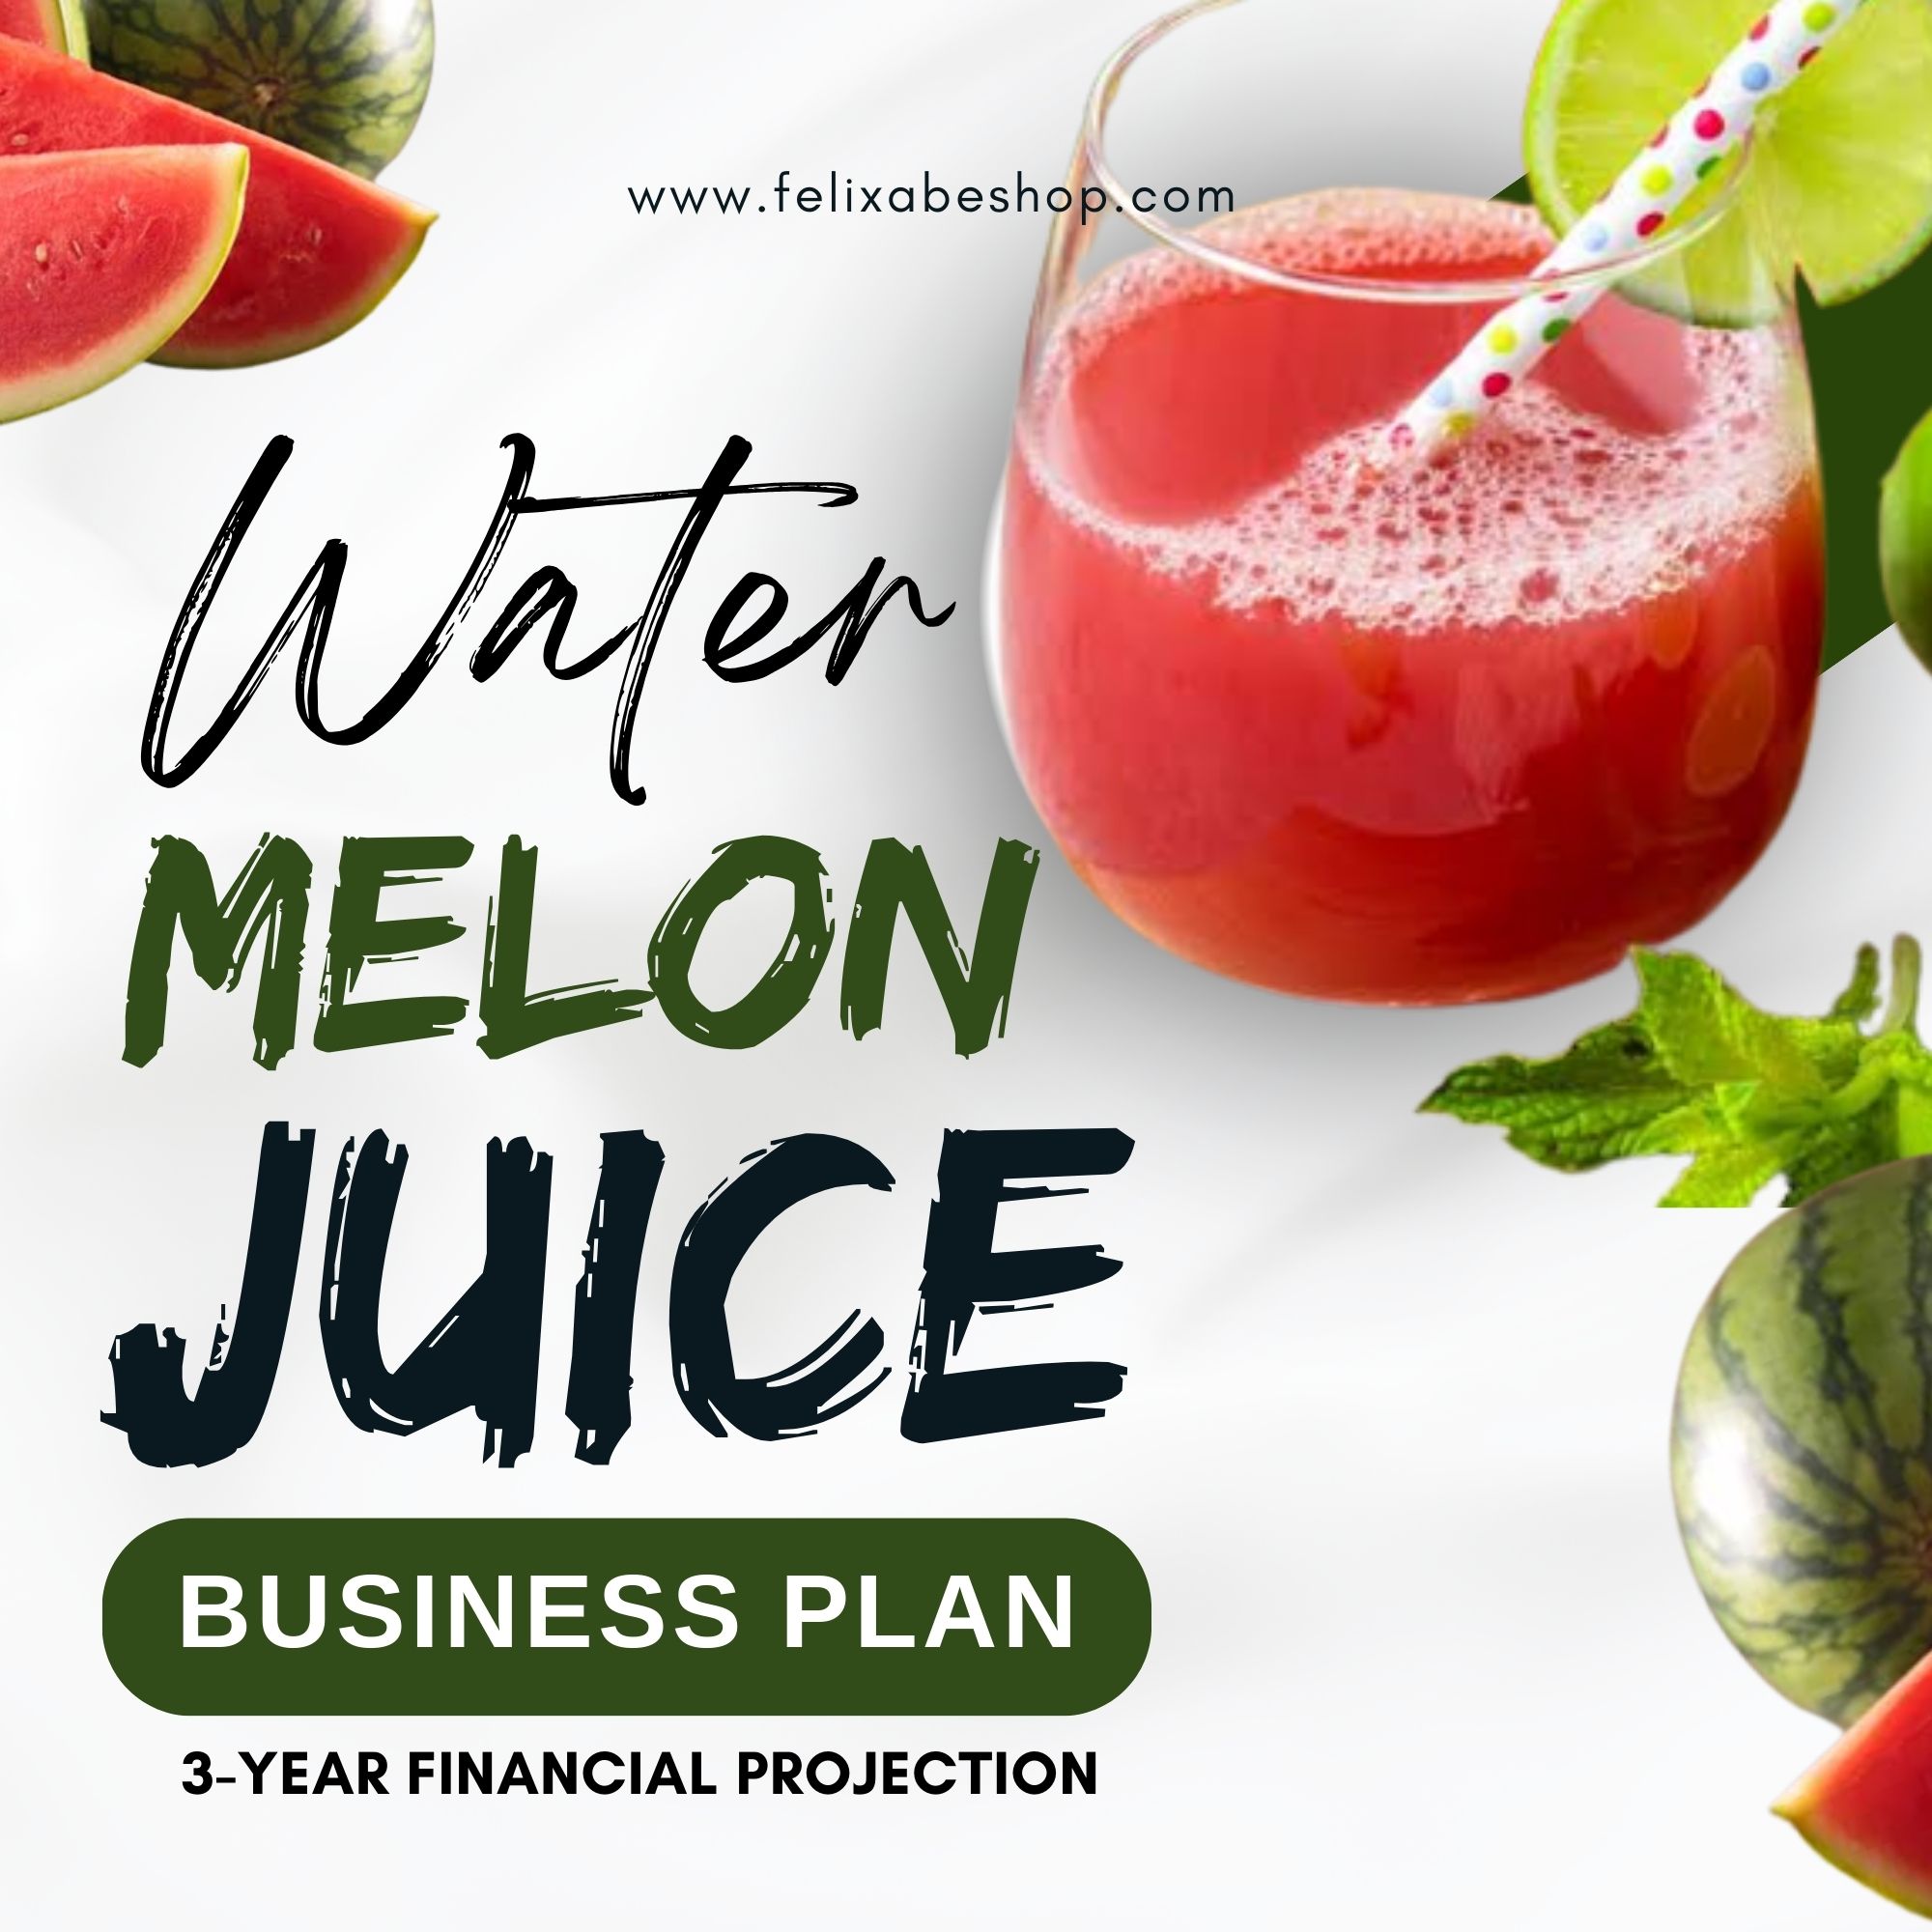 watermelon production business plan